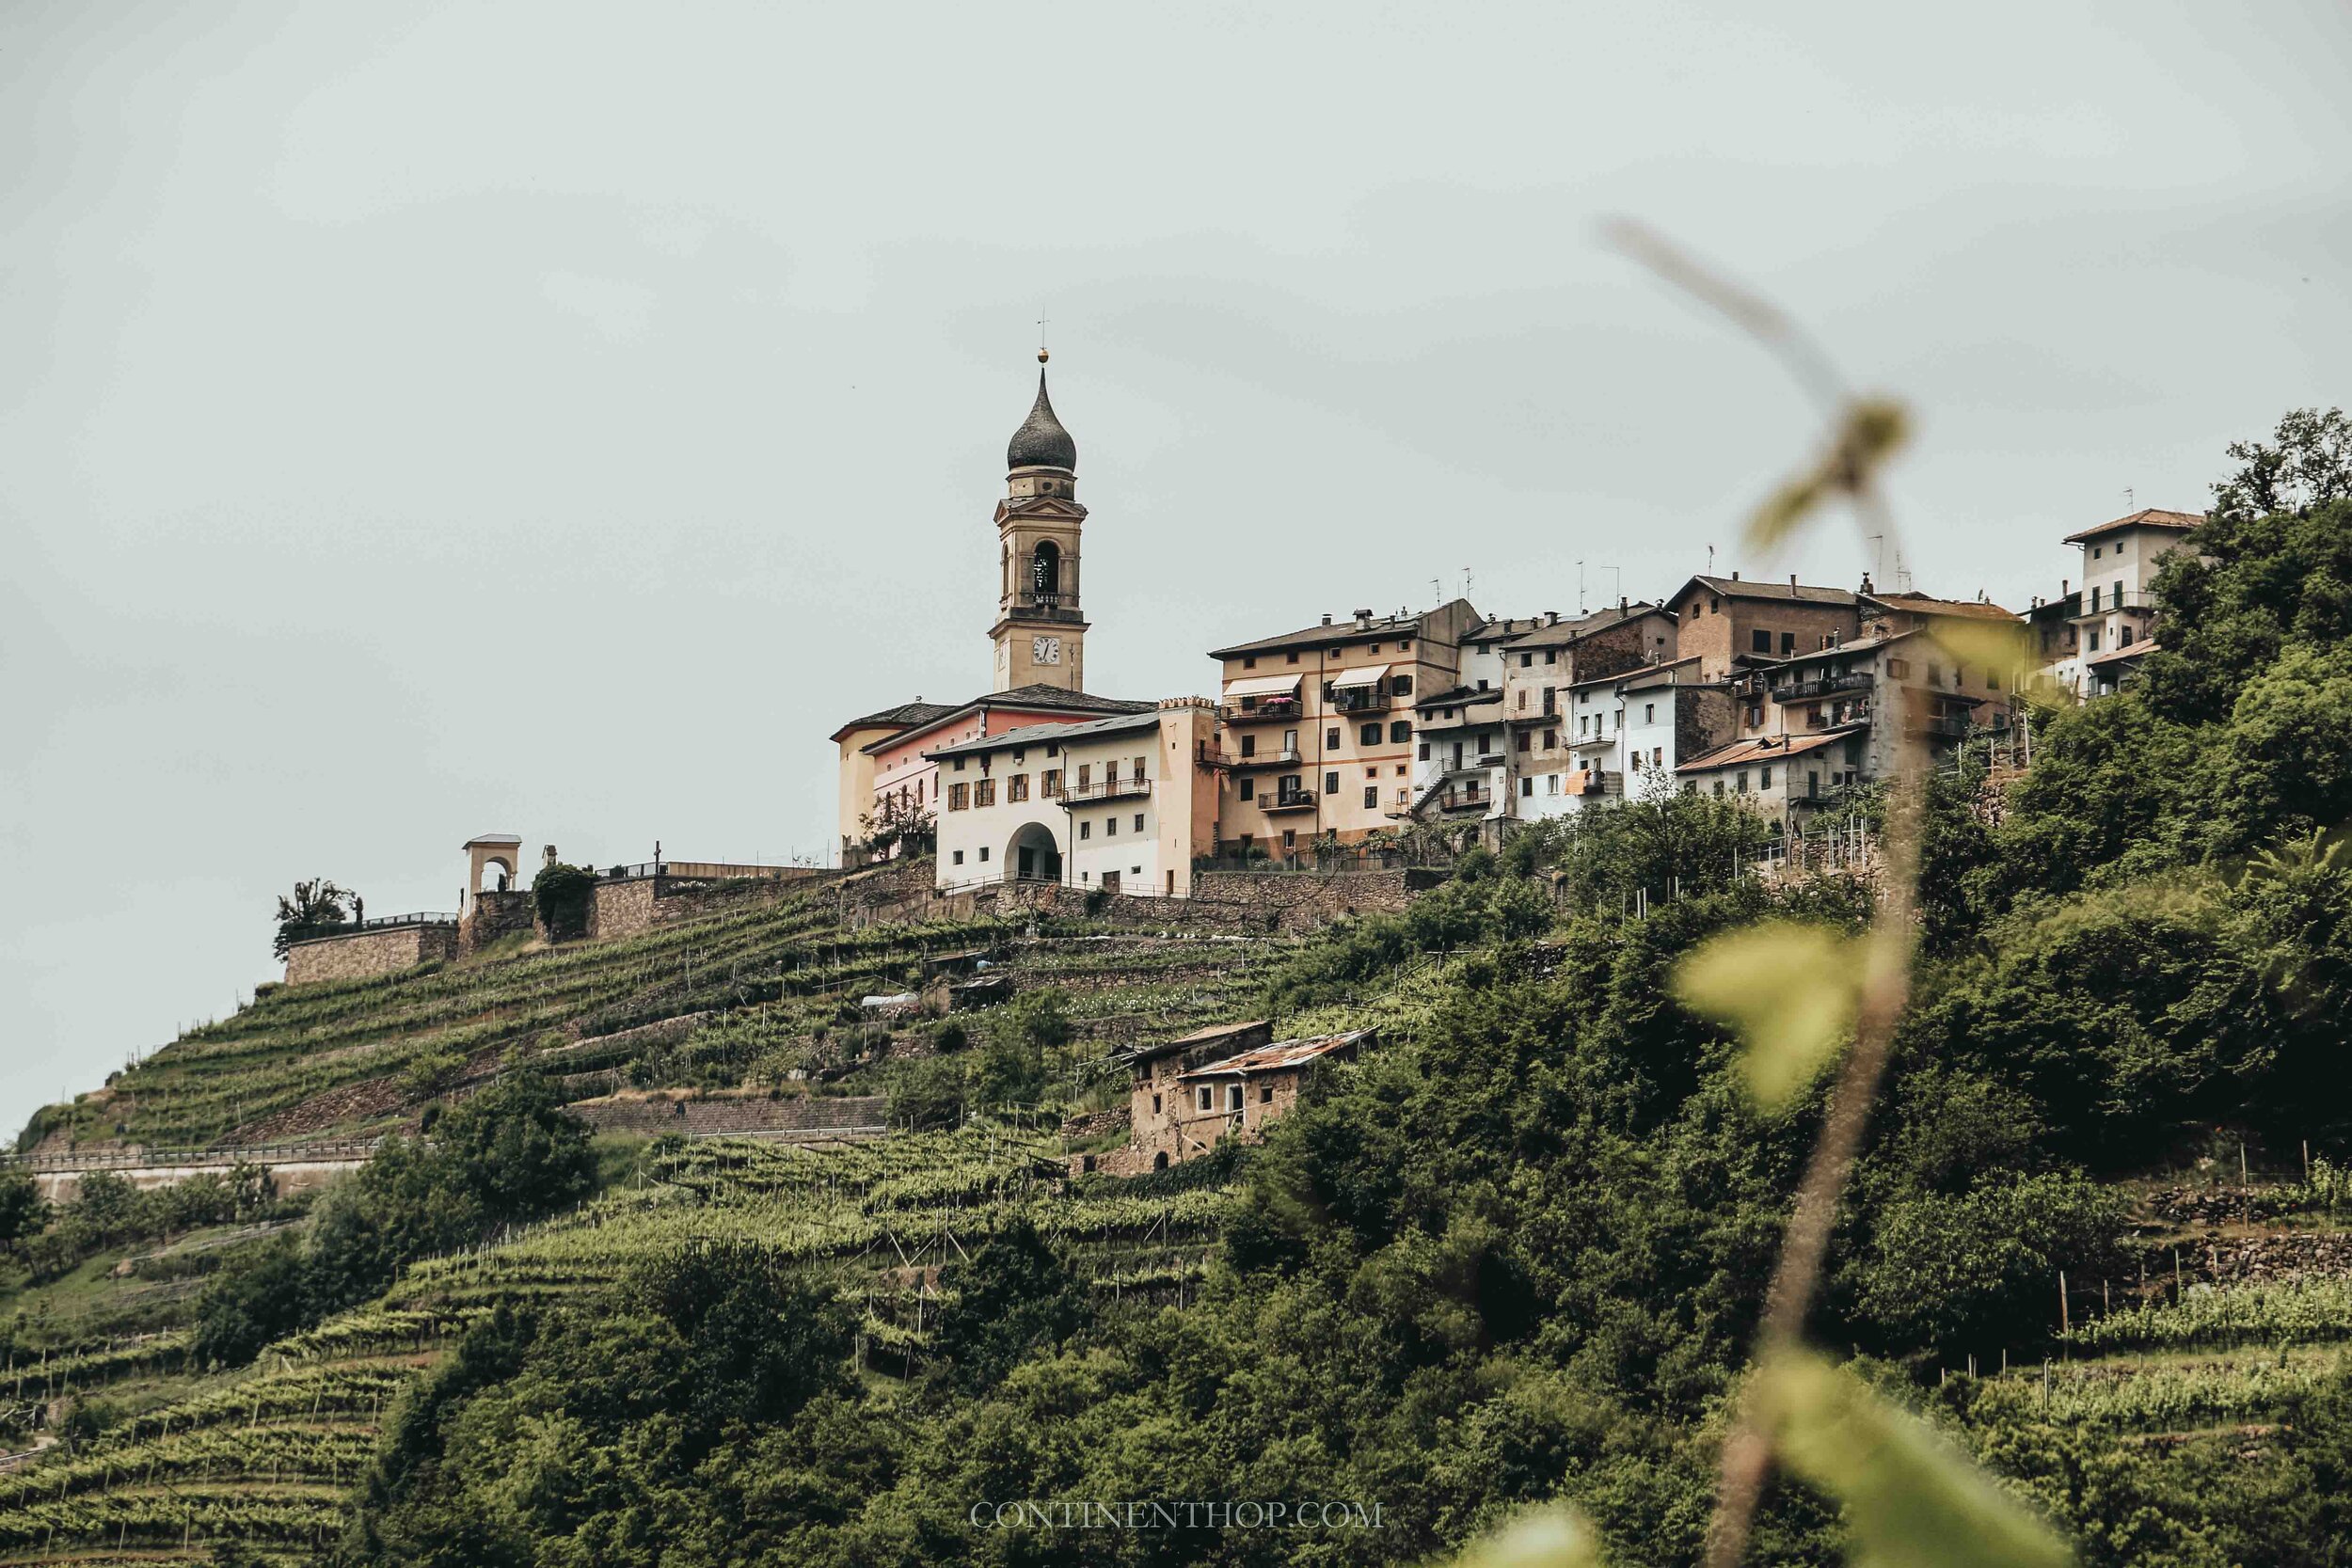 A view of the Bedollo village in Valle Di Cembra Trentino Italy